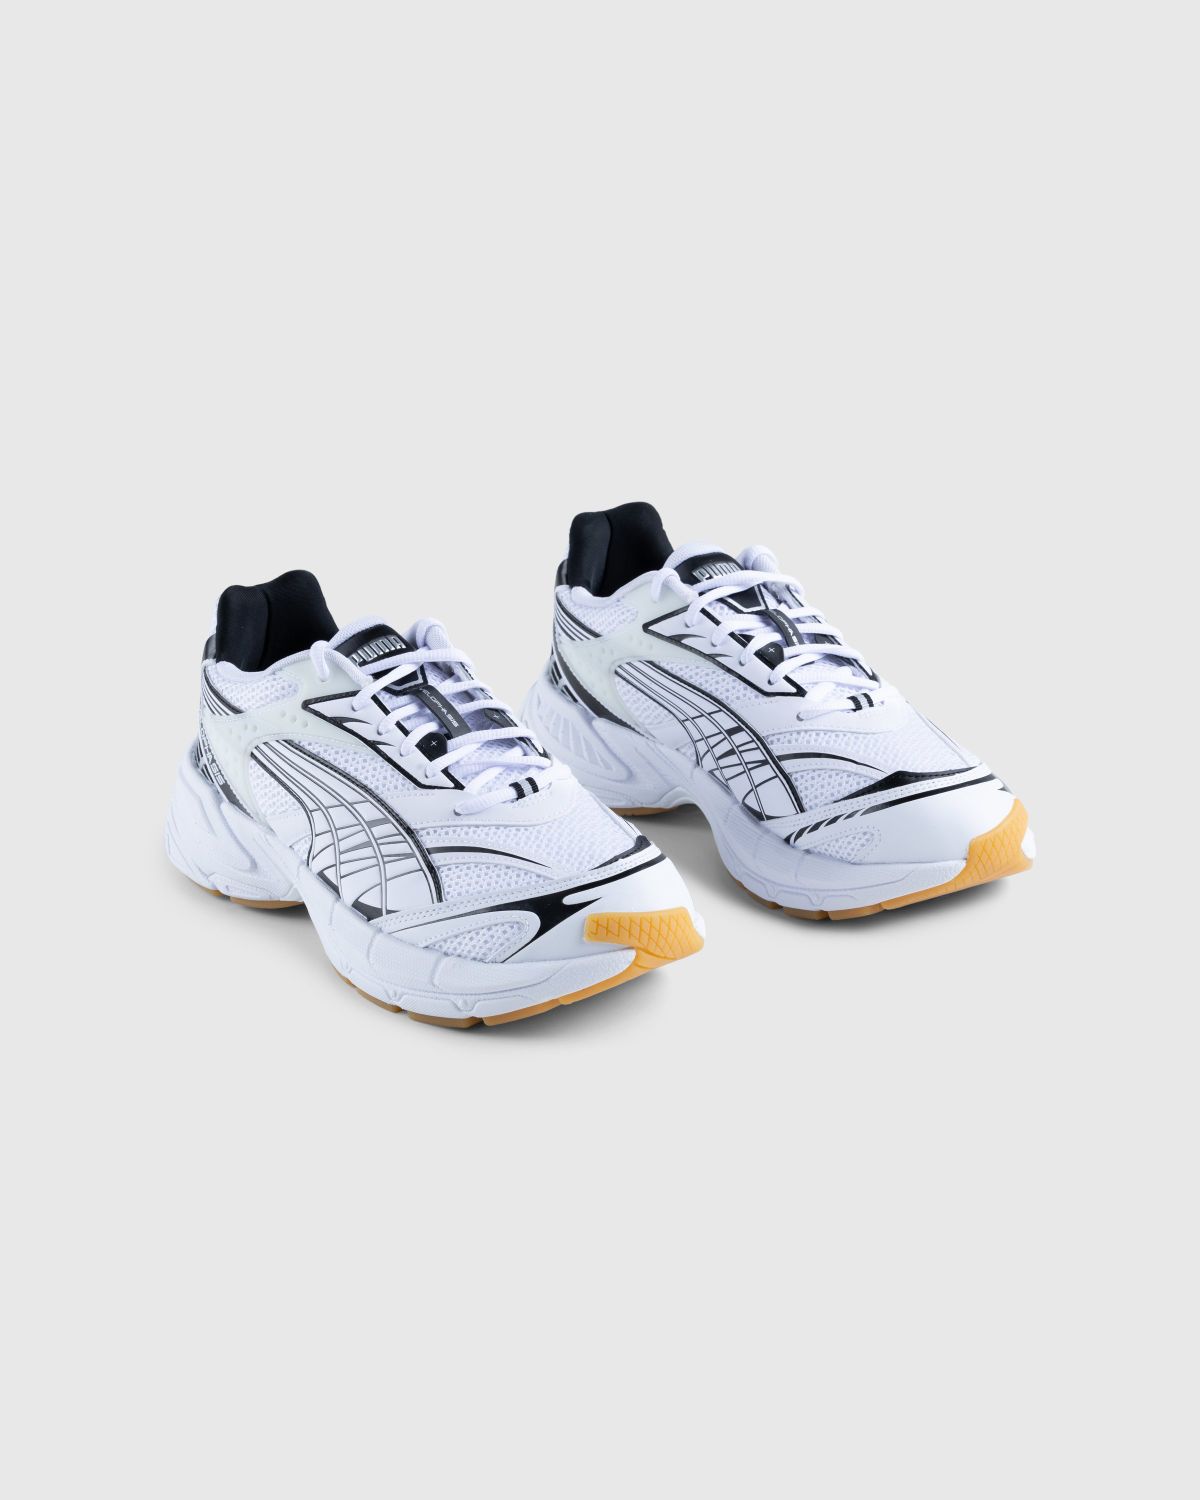 Puma – Velophasis Technisch White - Sneakers - White - Image 3